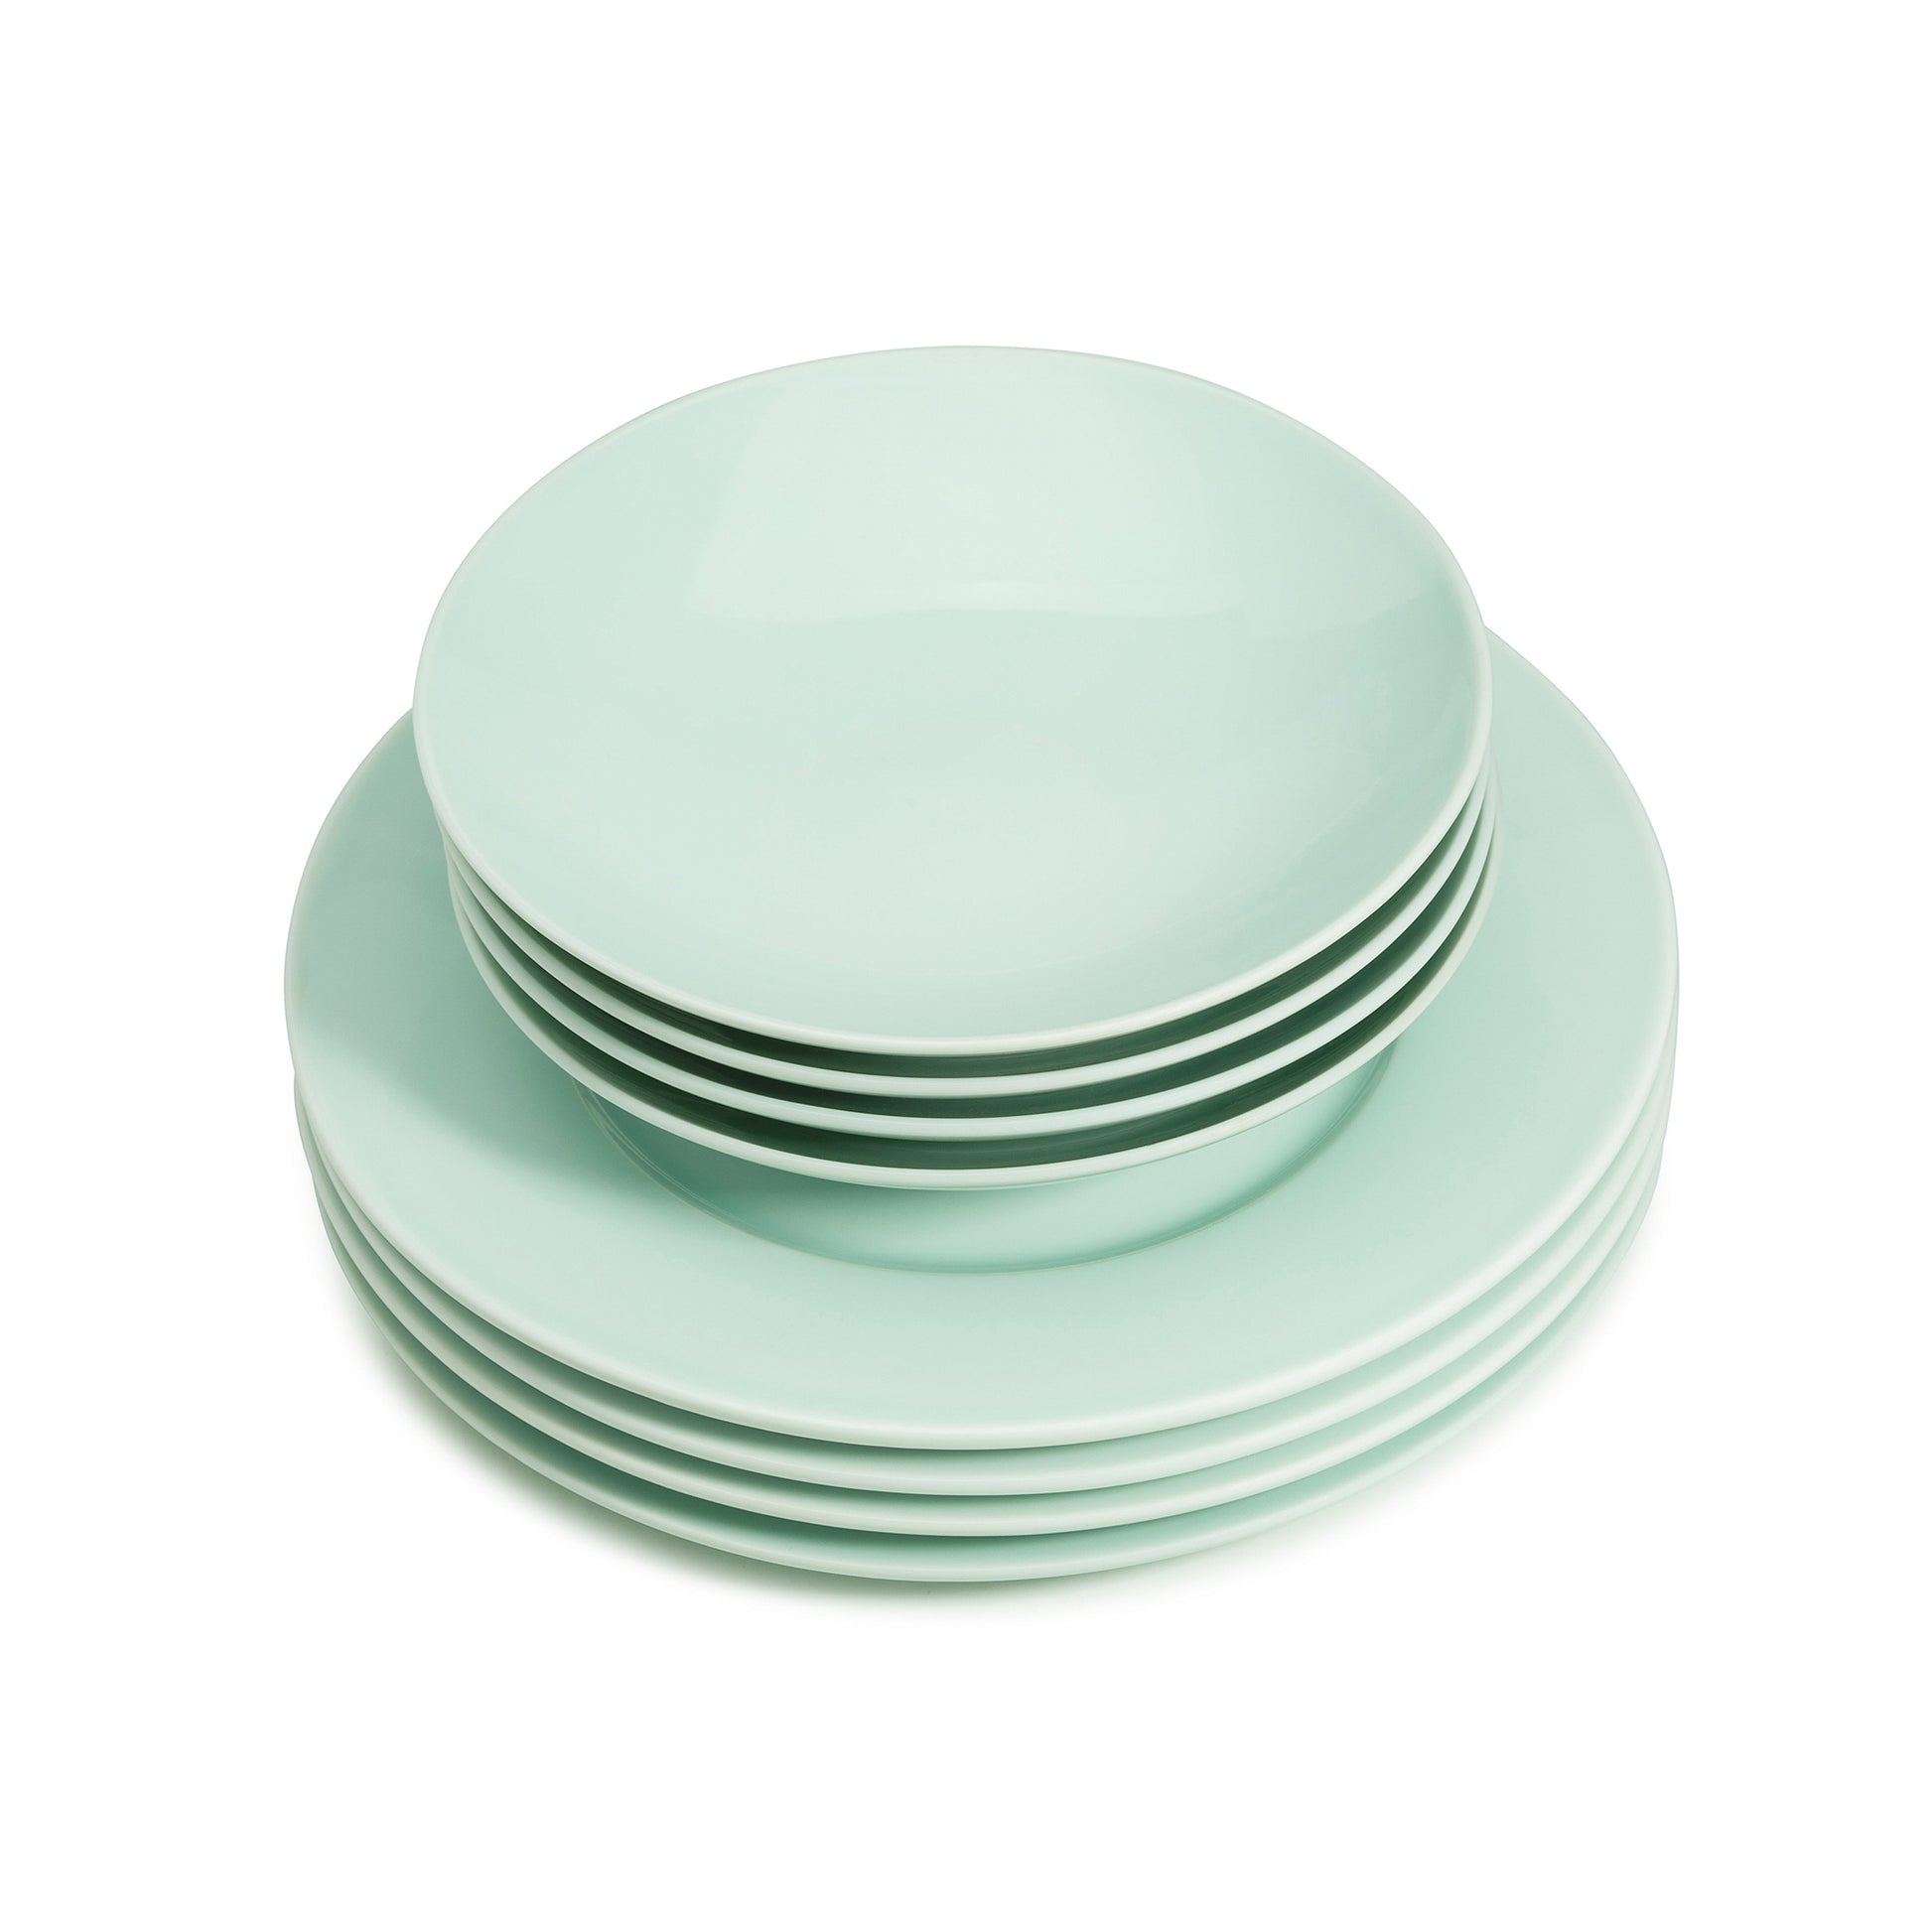 8 piece green celadon porcelain dinnerware set, 11 3/4" wide rim dinner plates, 8" salad/soup bowls, media 3 of 6